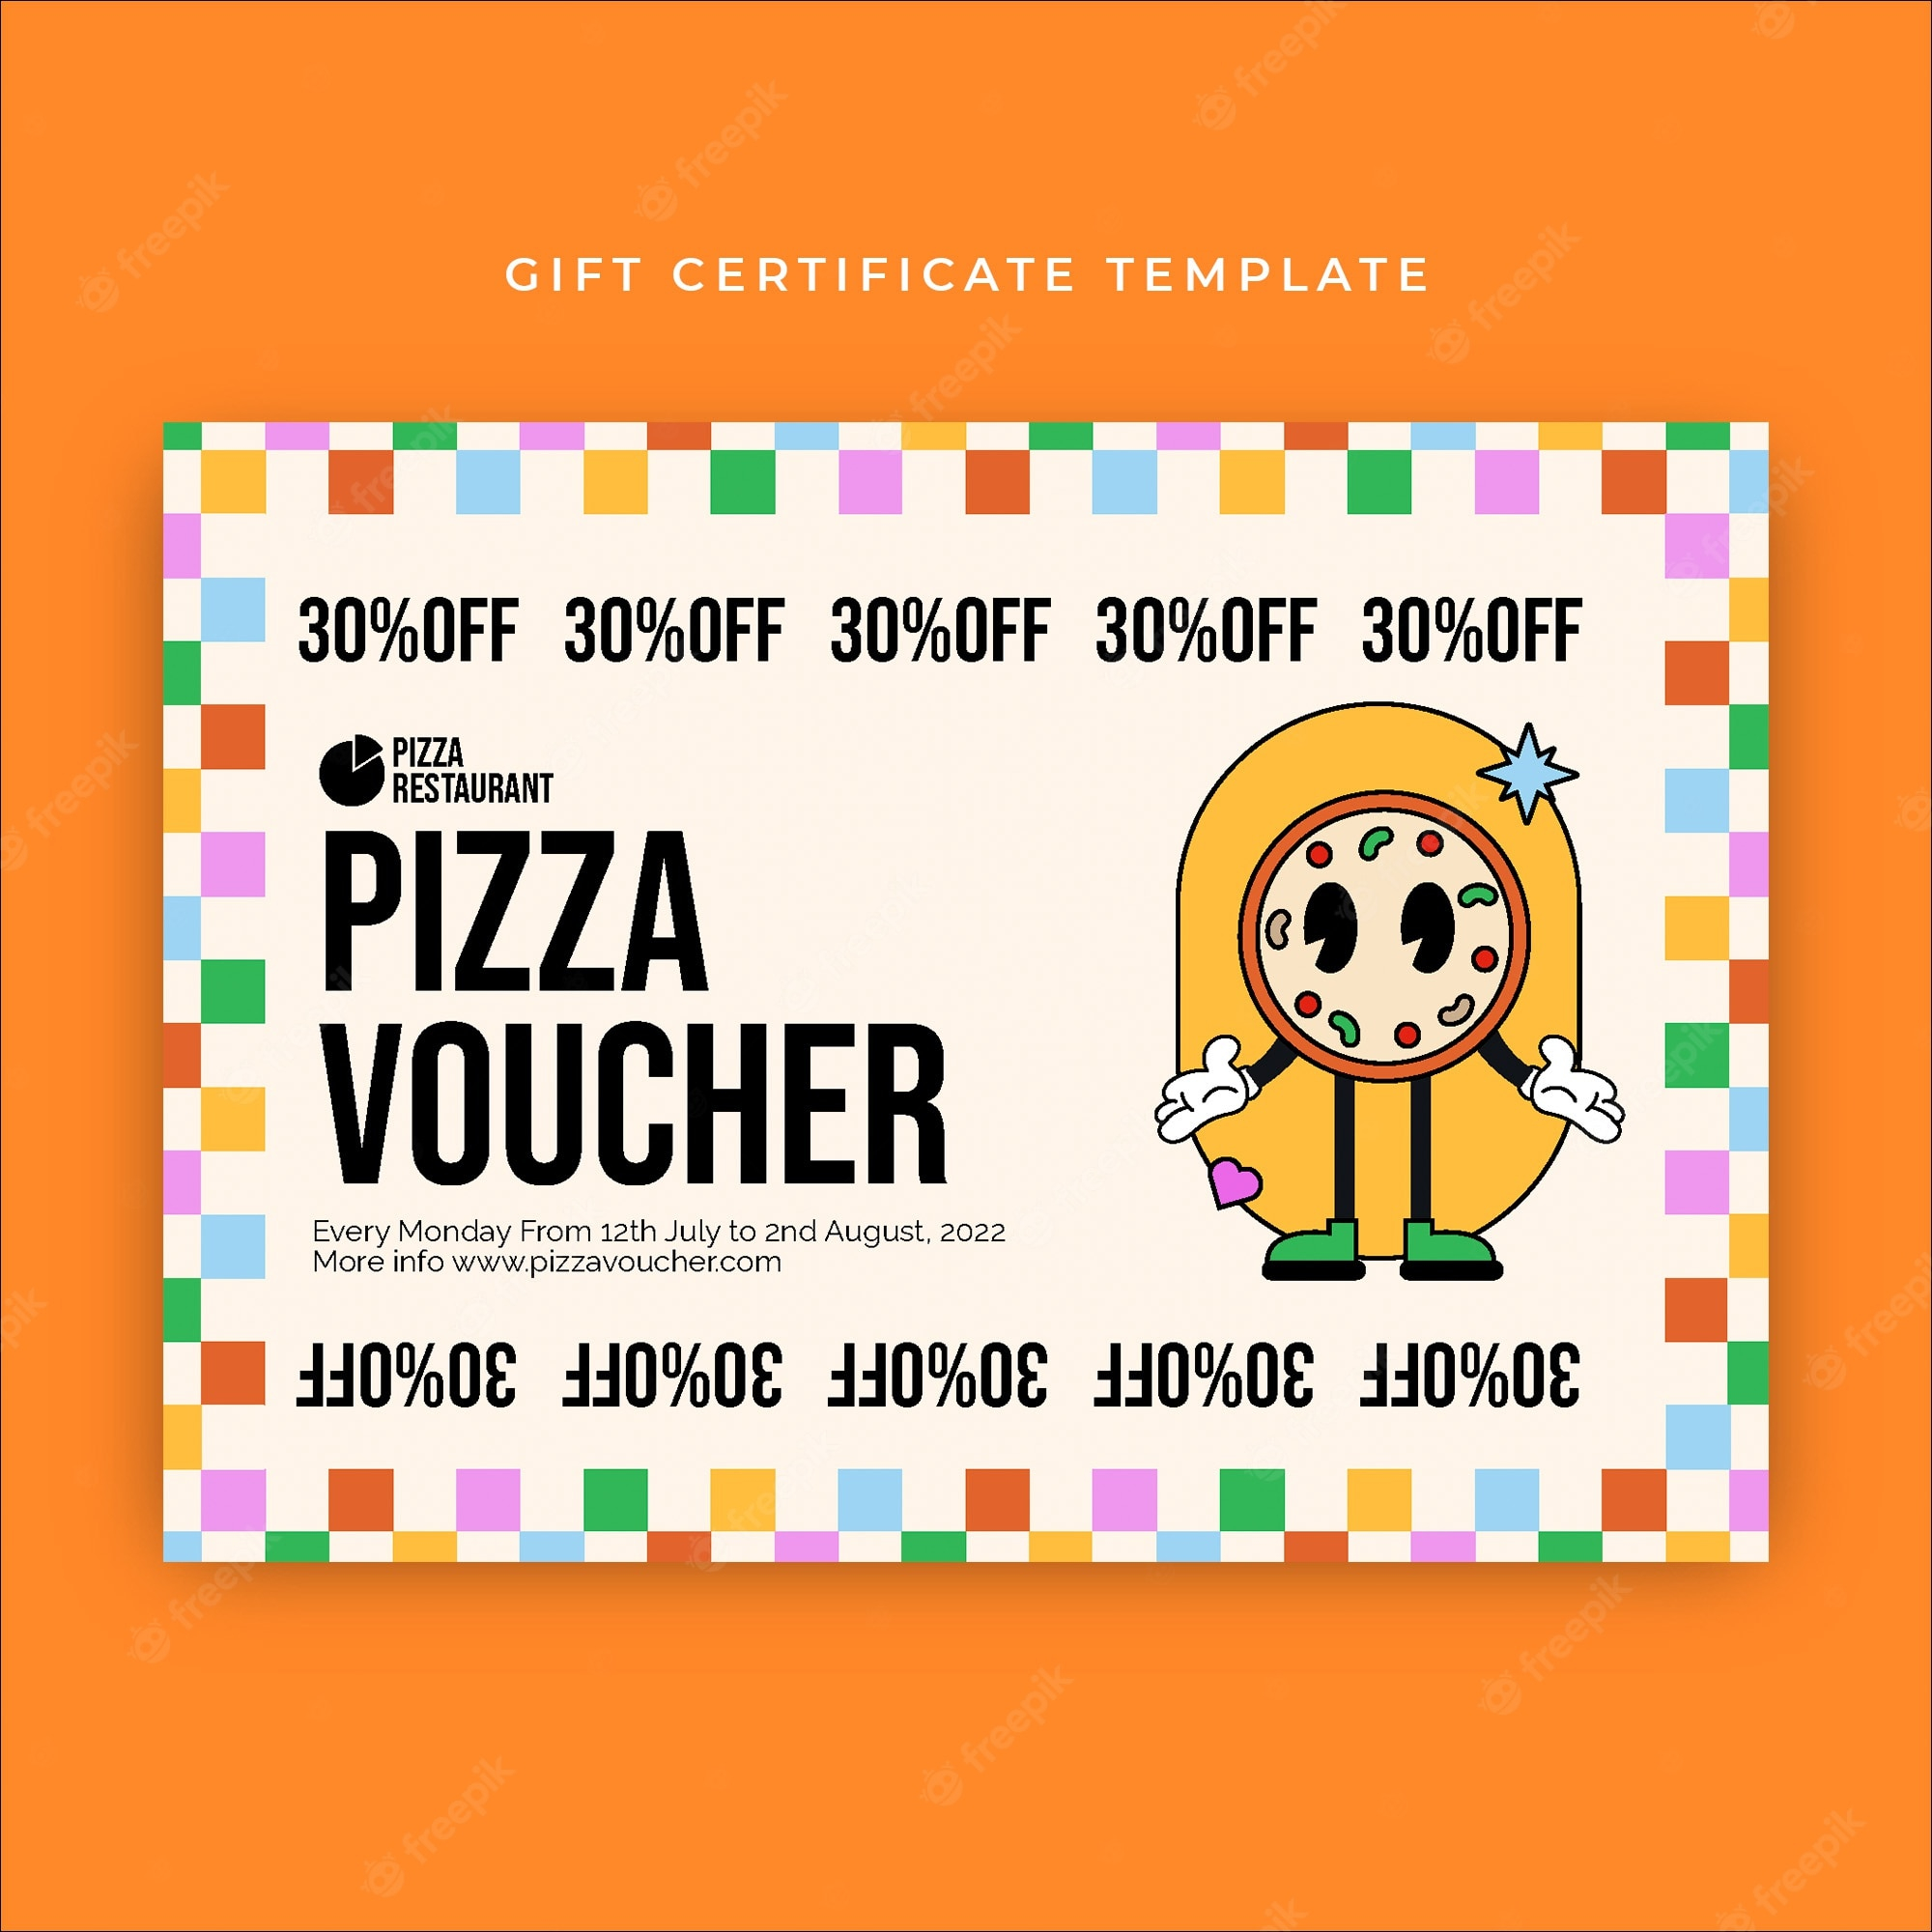 Restaurant gift certificate Vectors & Illustrations for Free  Regarding Pizza Gift Certificate Template